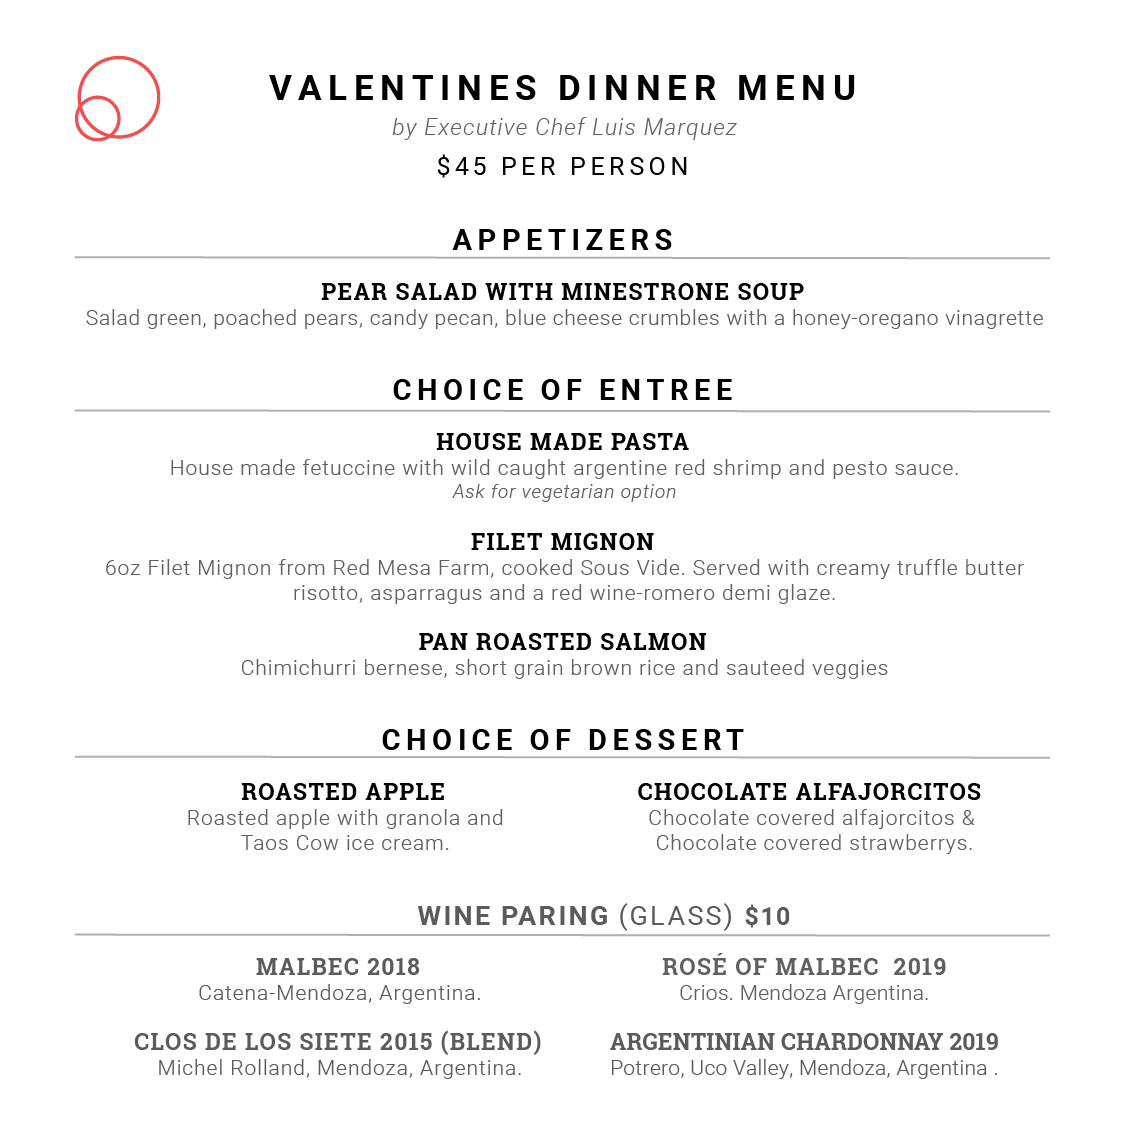 Valentines-menu-square.png